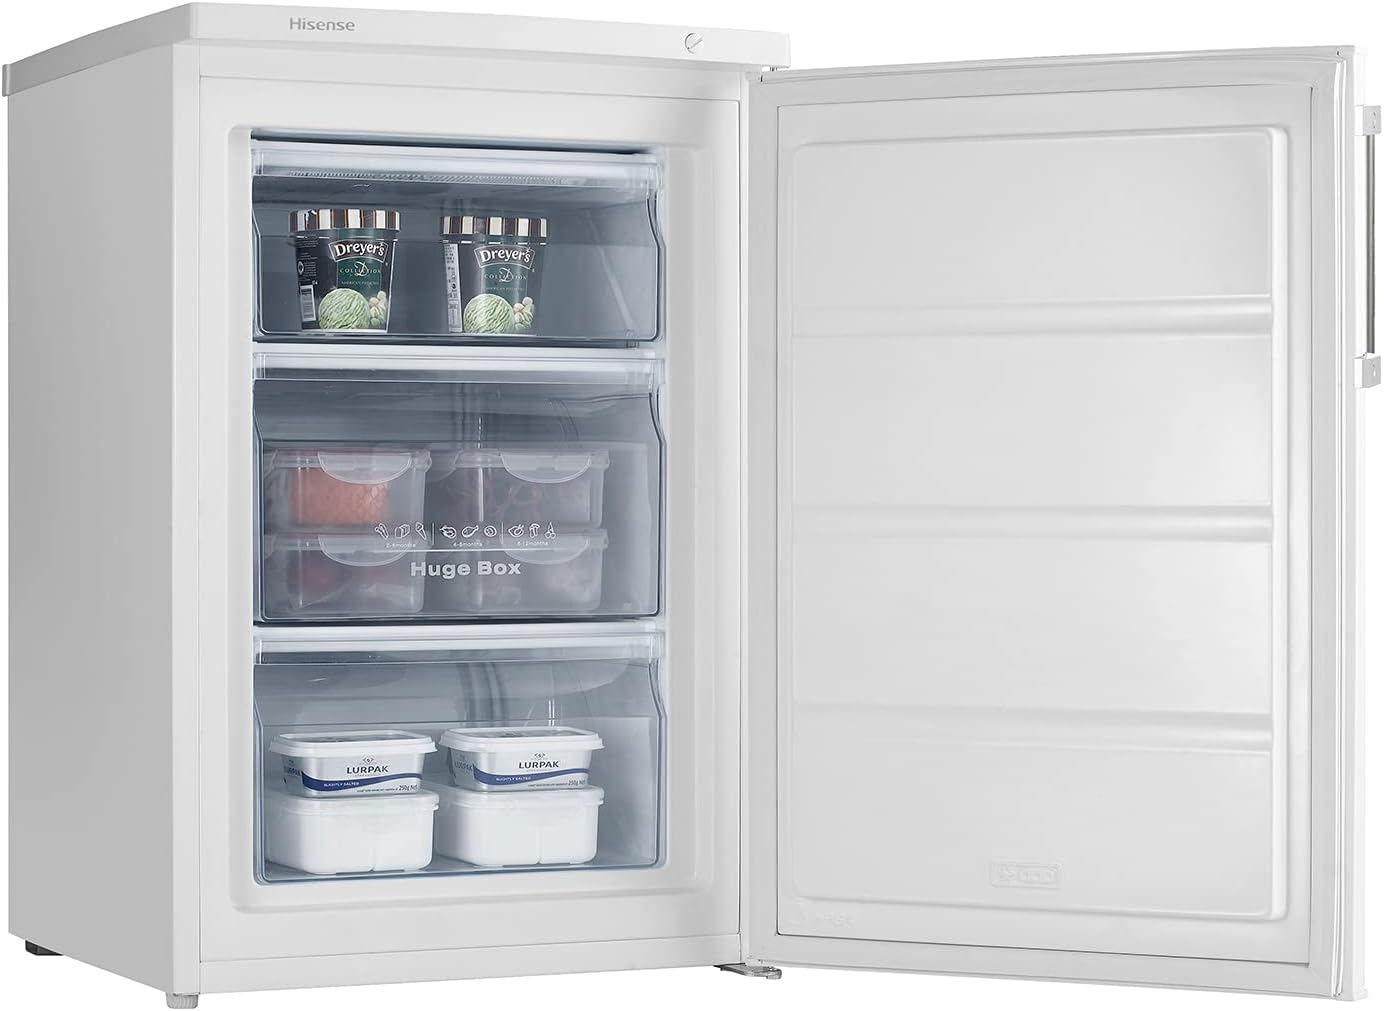 Hisense FV105D4BW21 56cm Under Counter Freezer - 82 litre capacity - Reversible Door - 3 Freezer Drawers - White - E Rated